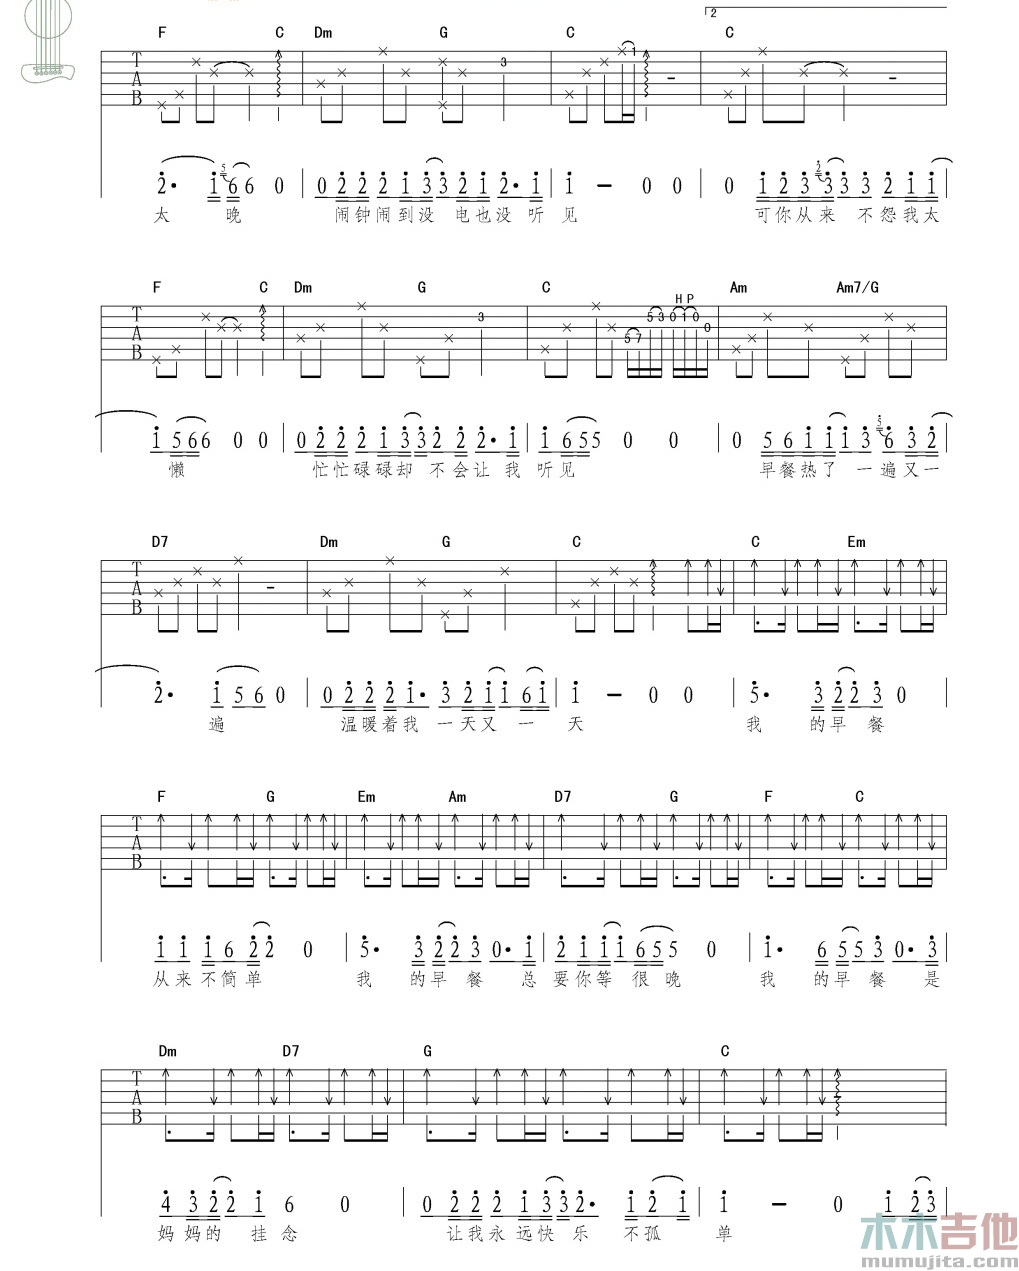 吴彤《早餐》吉他谱-Guitar Music Score